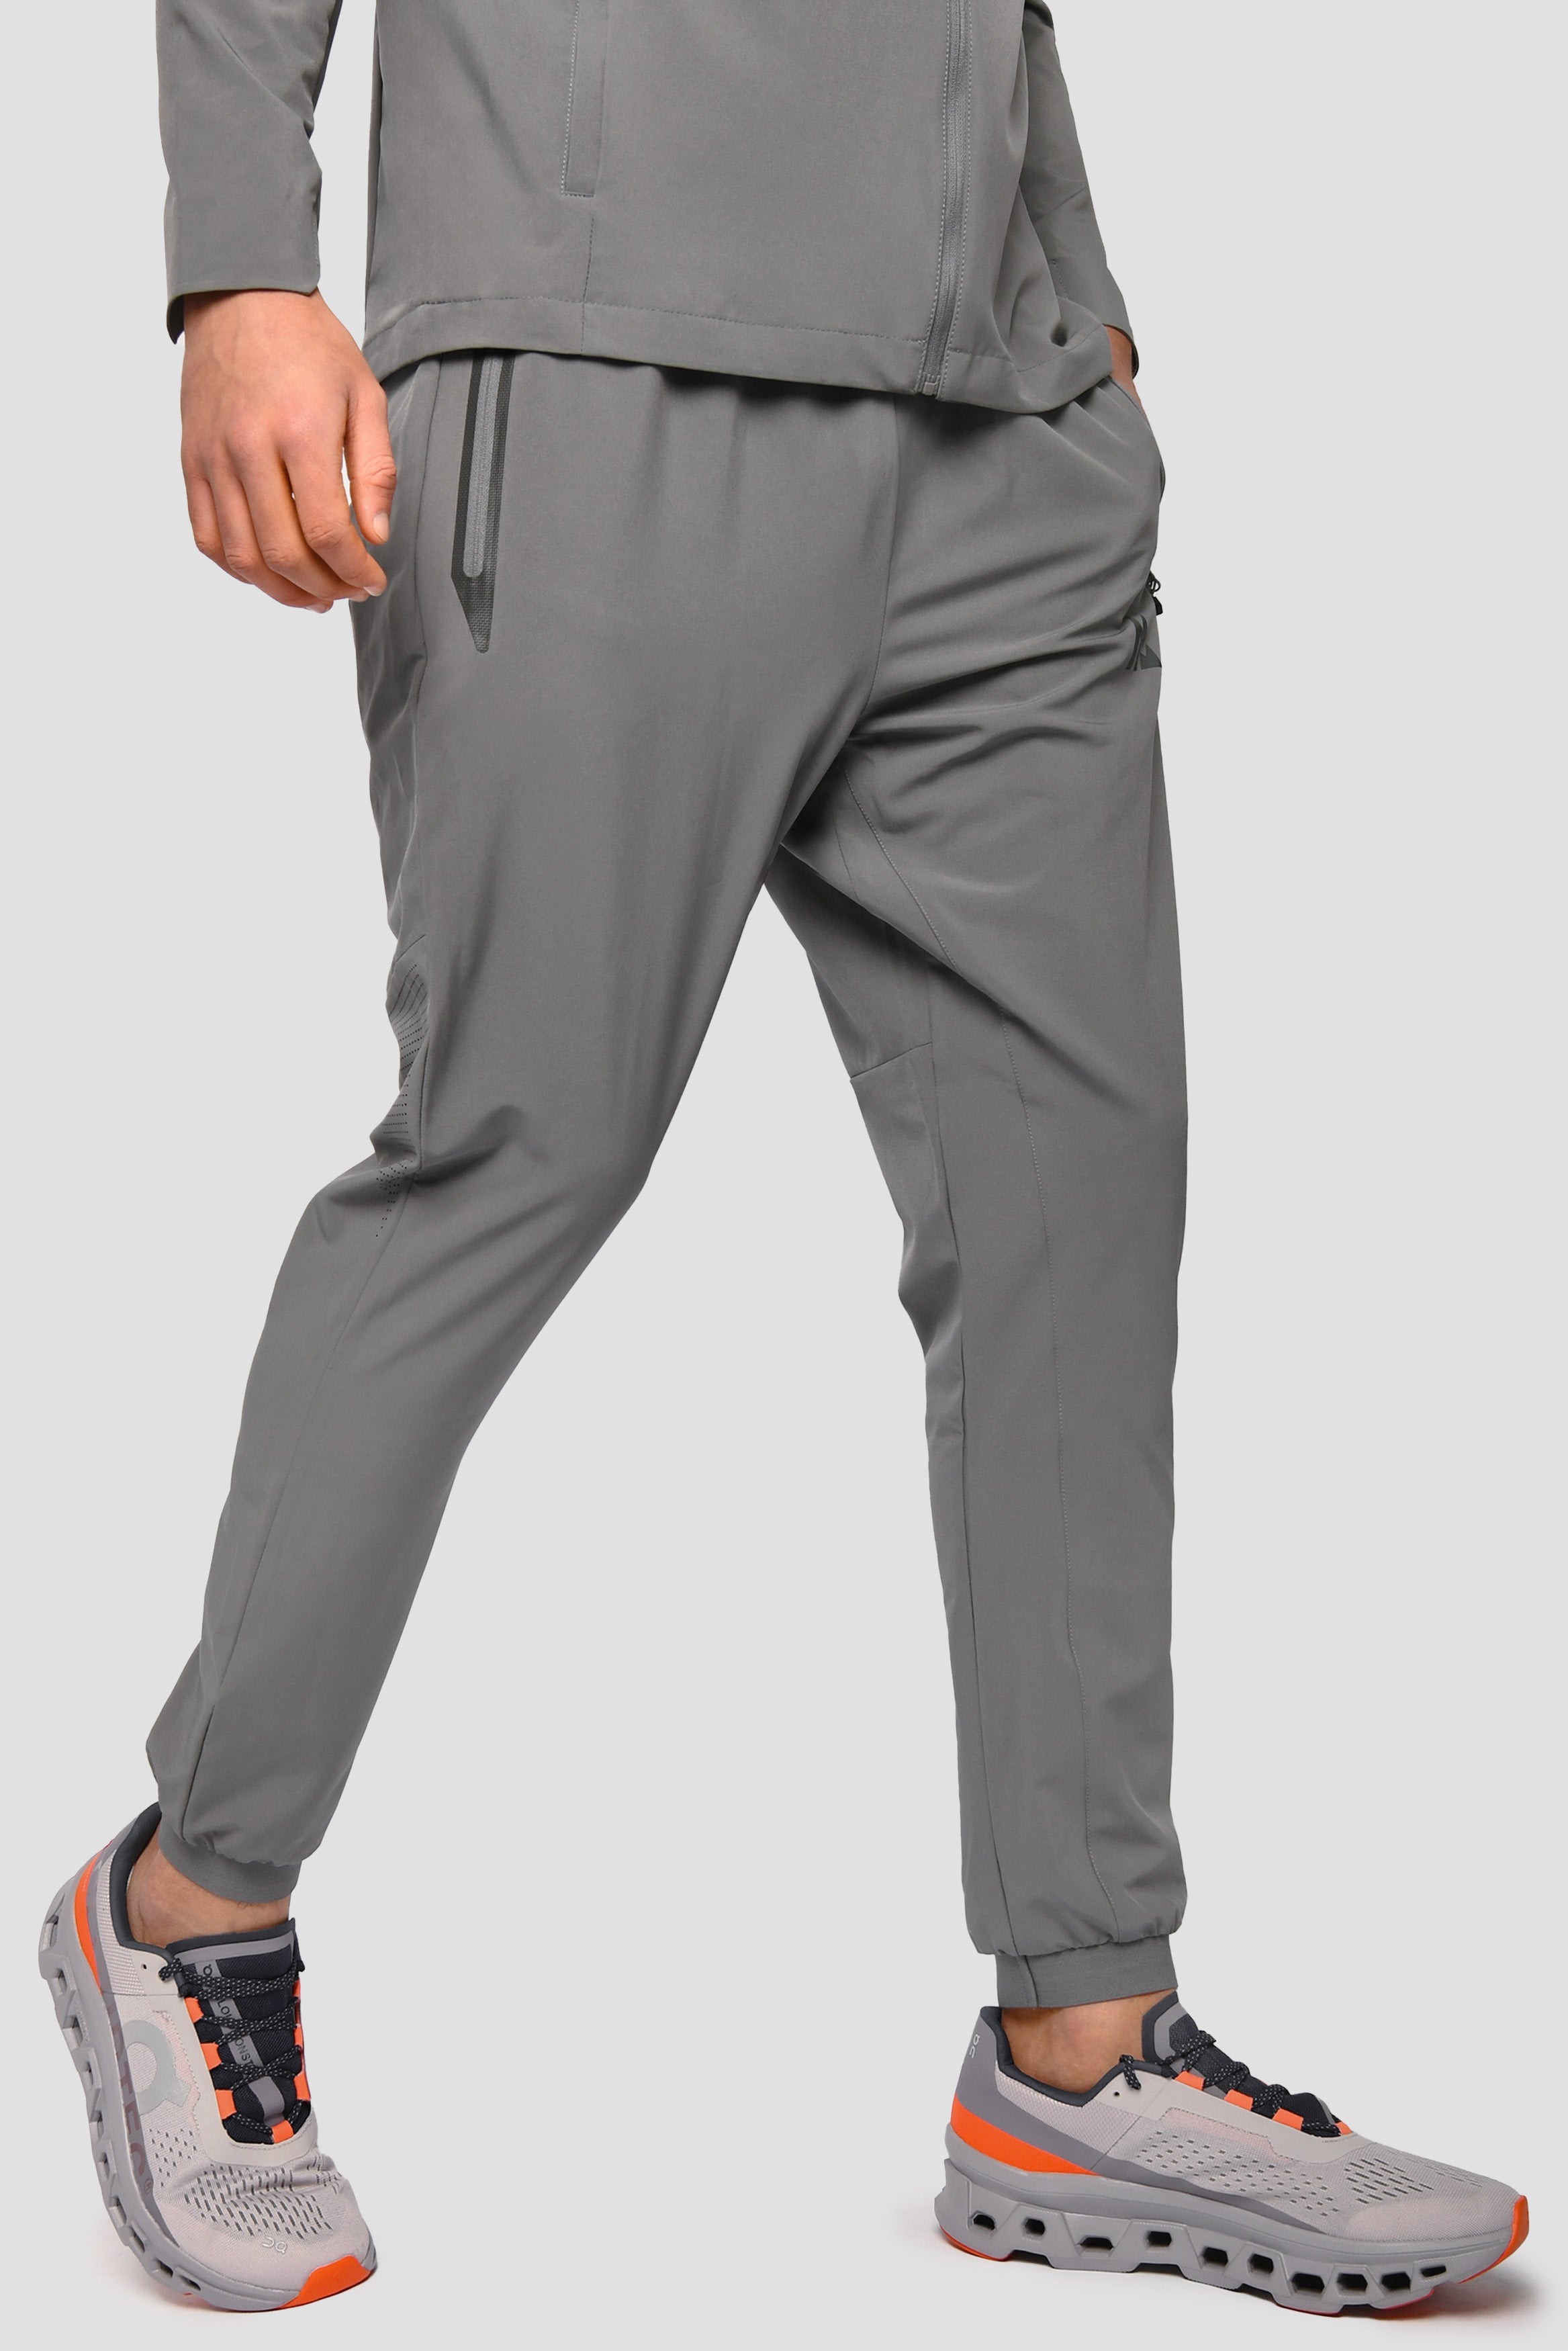 Men's Lumos Woven Pant - Cement Grey